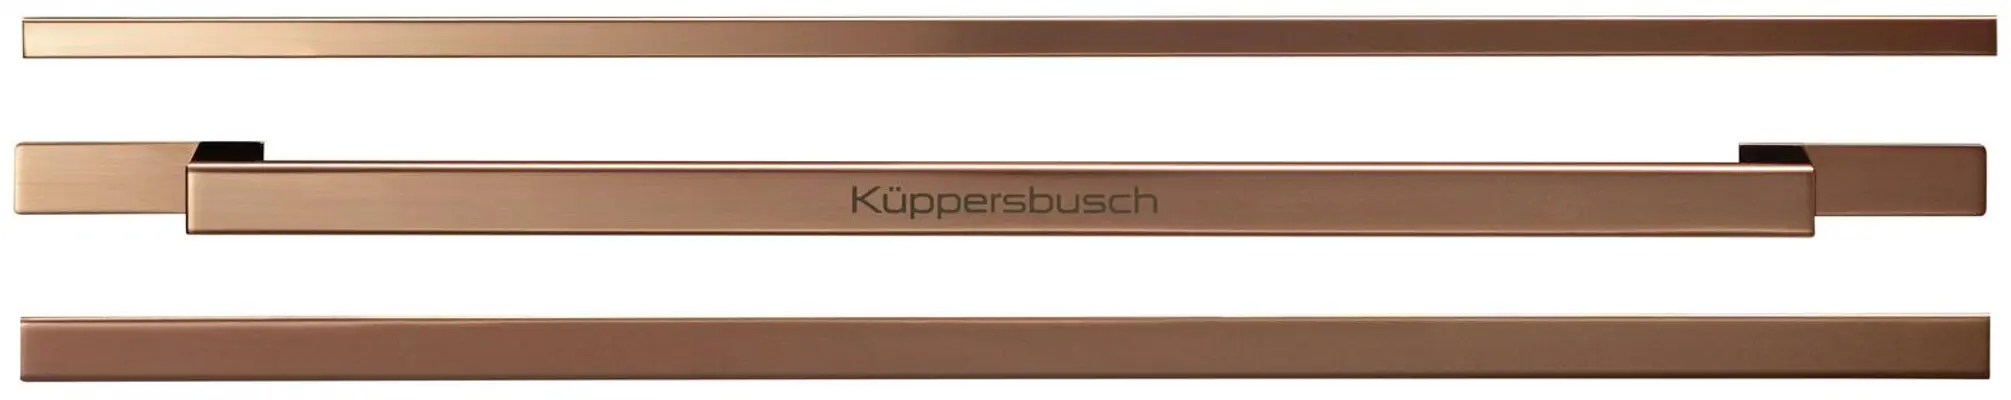 DK7000-Kuppersbusch-Koel-vries-accessoires